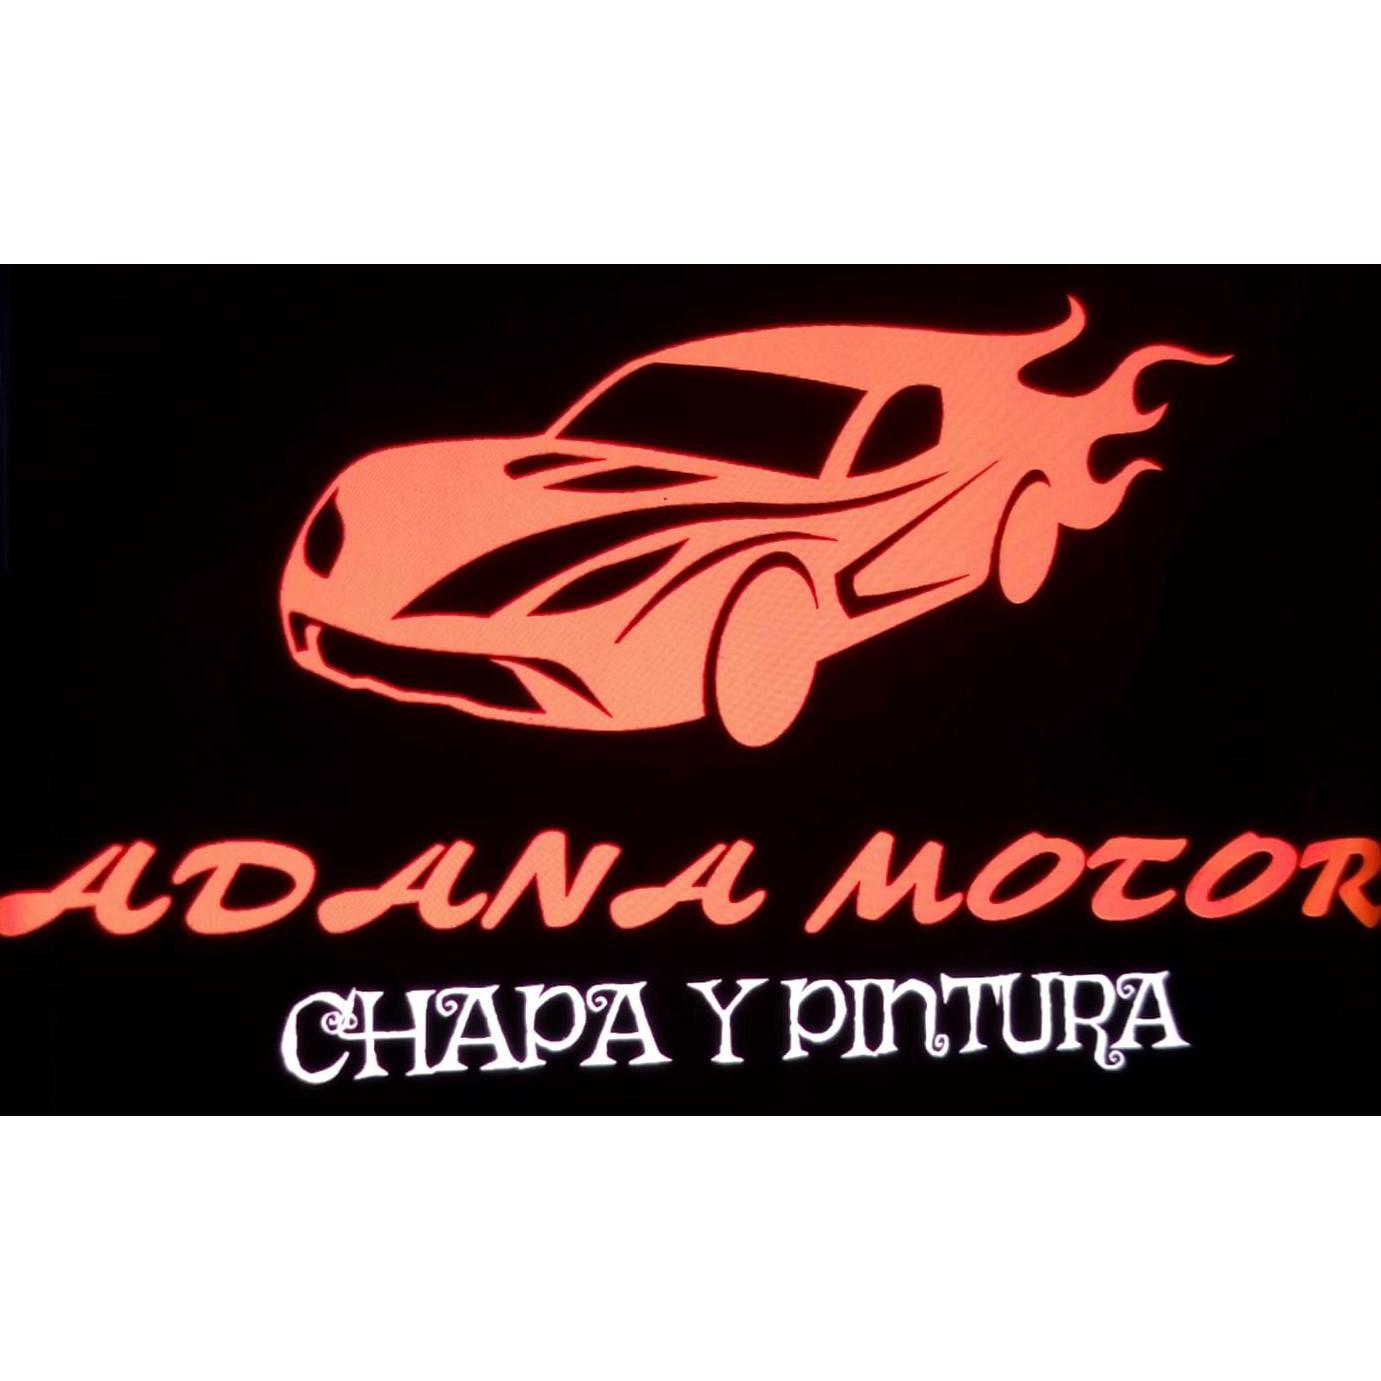 Adana Motor Collado Villalba